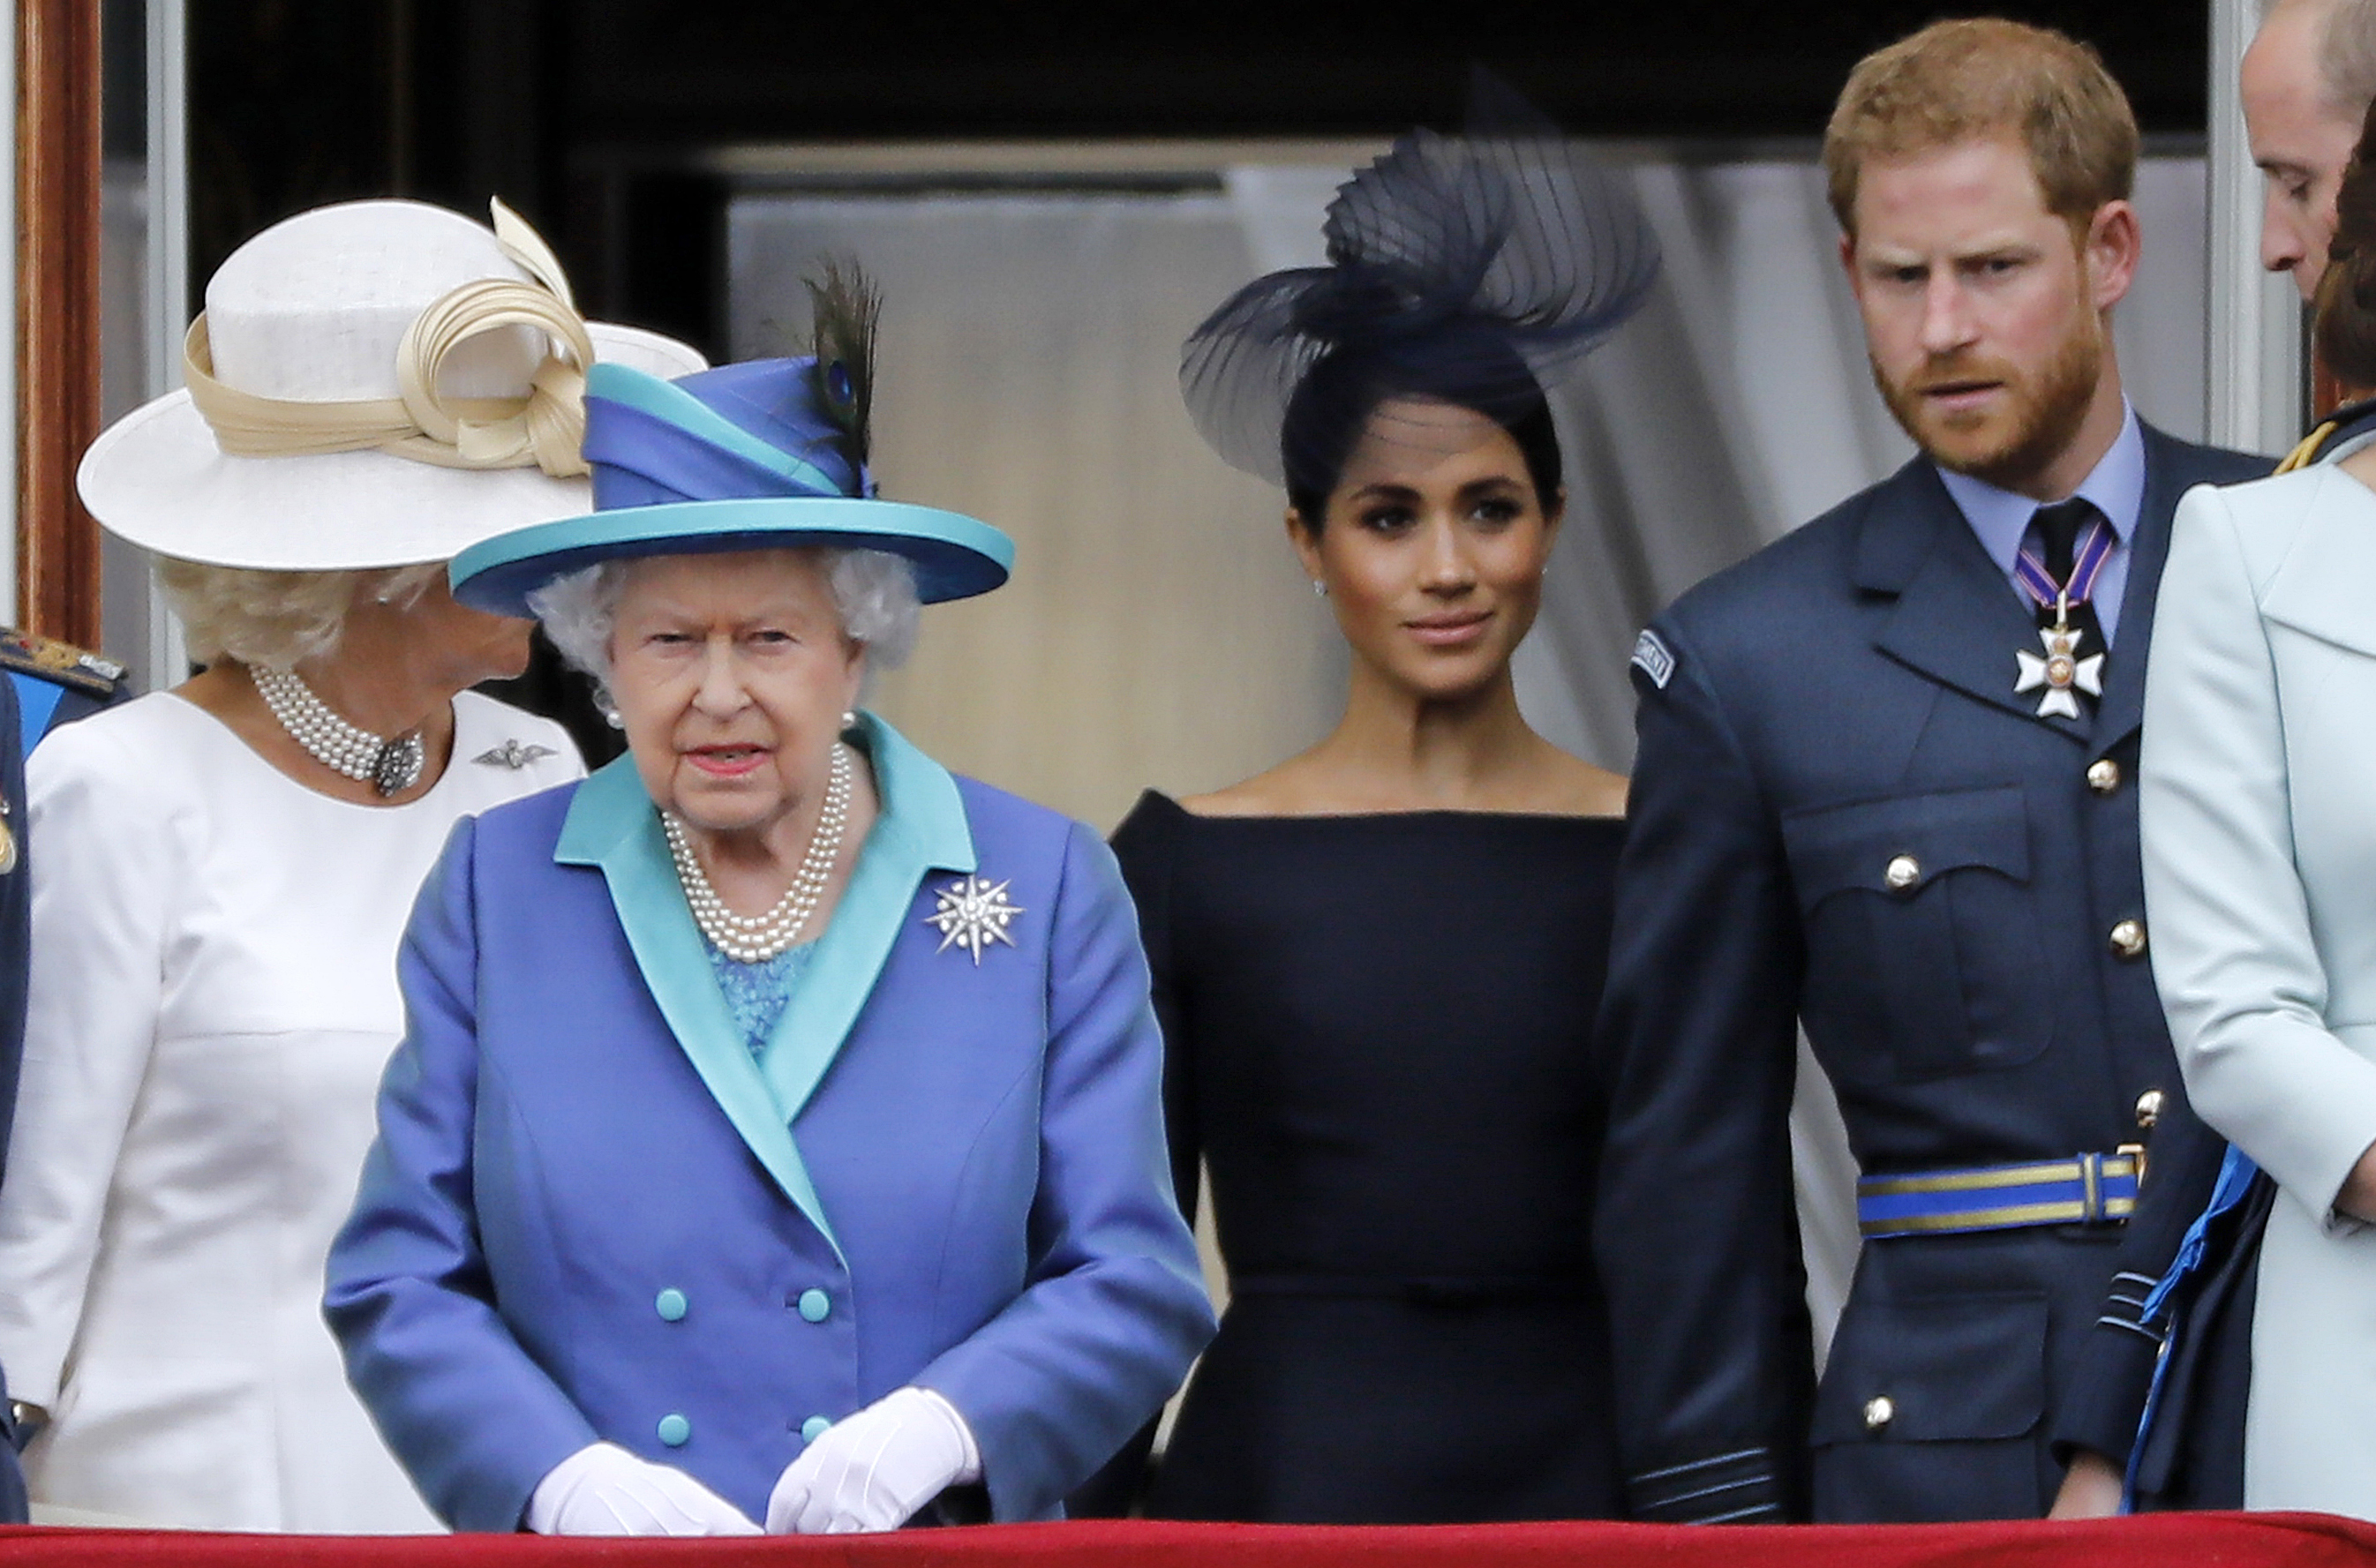 Koningin Elizabeth steunt Harry en Meghan